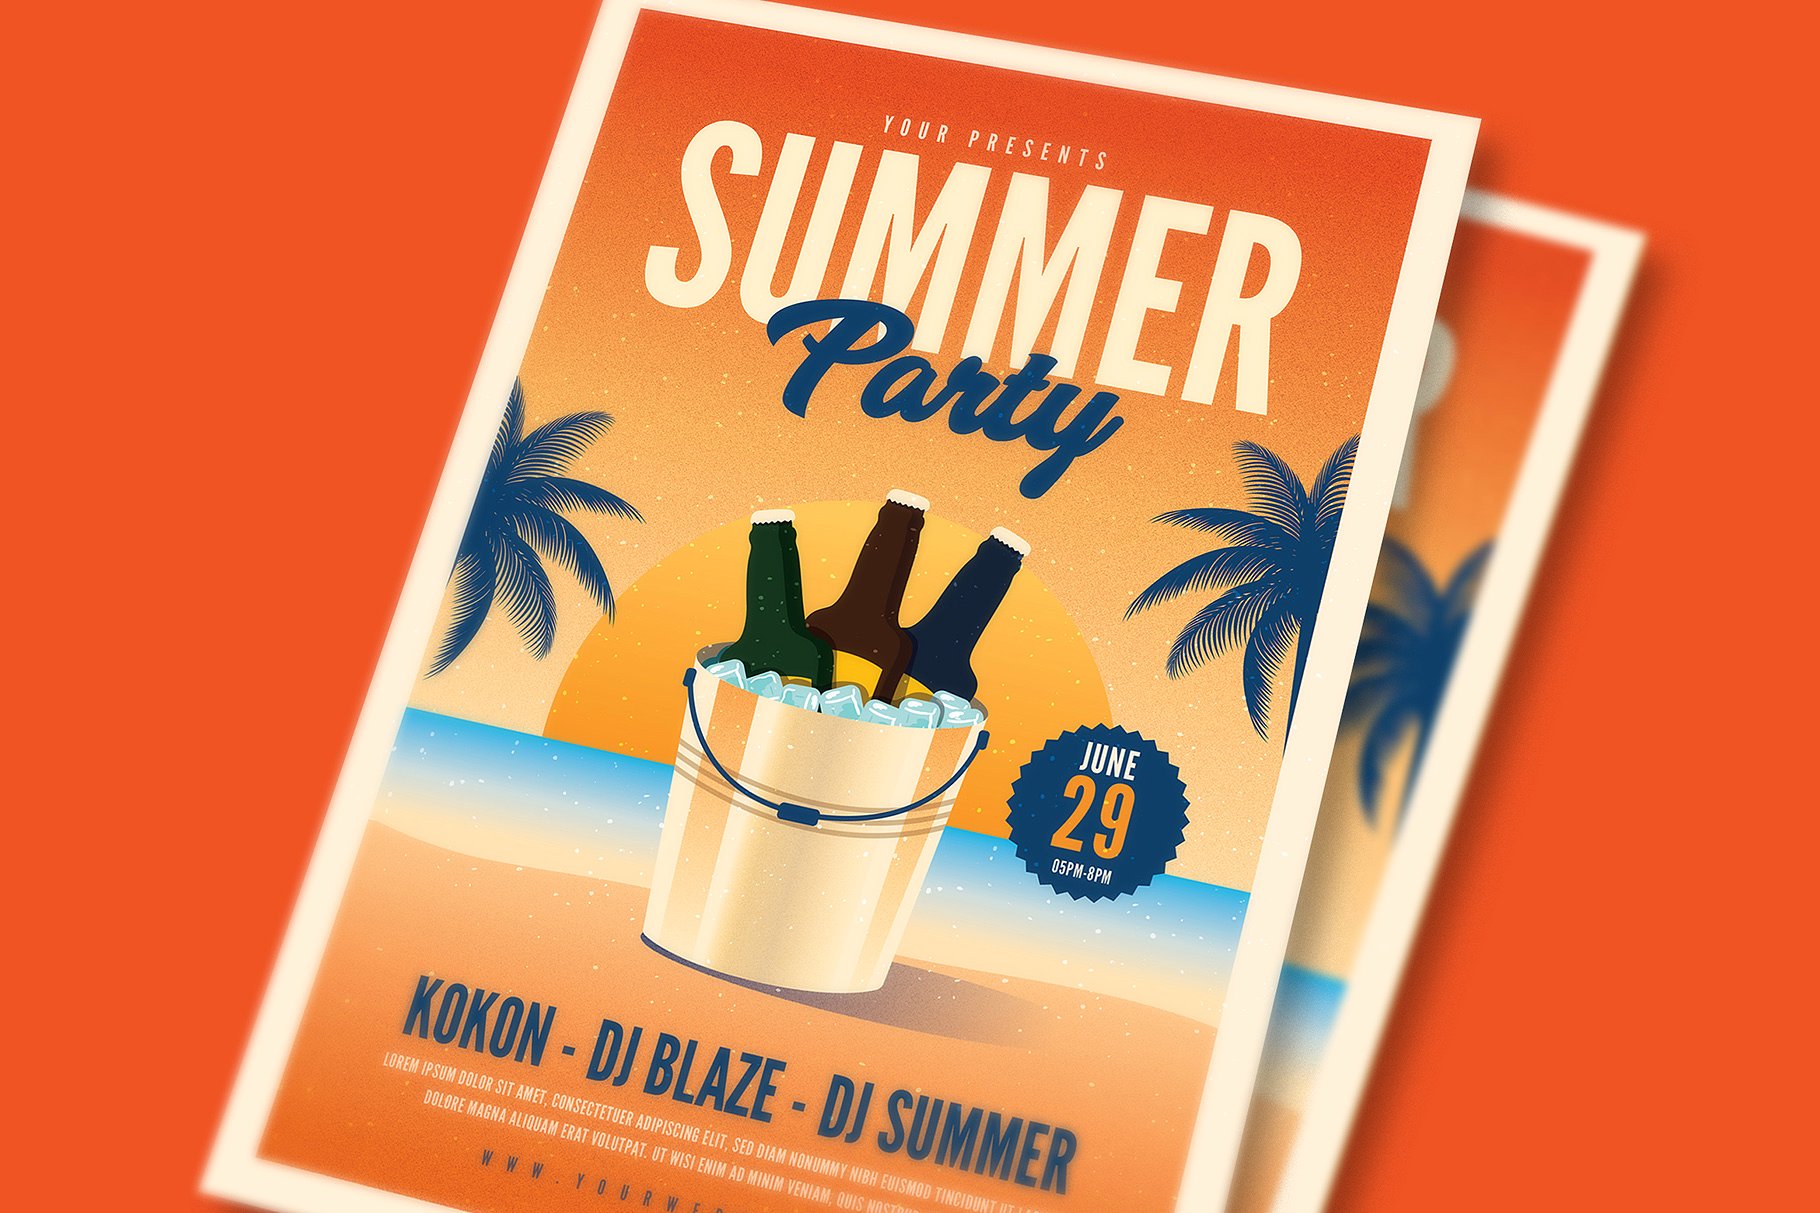 夏日啤酒主题派对活动海报模板 Summer Beer Party Event Flyer插图(1)